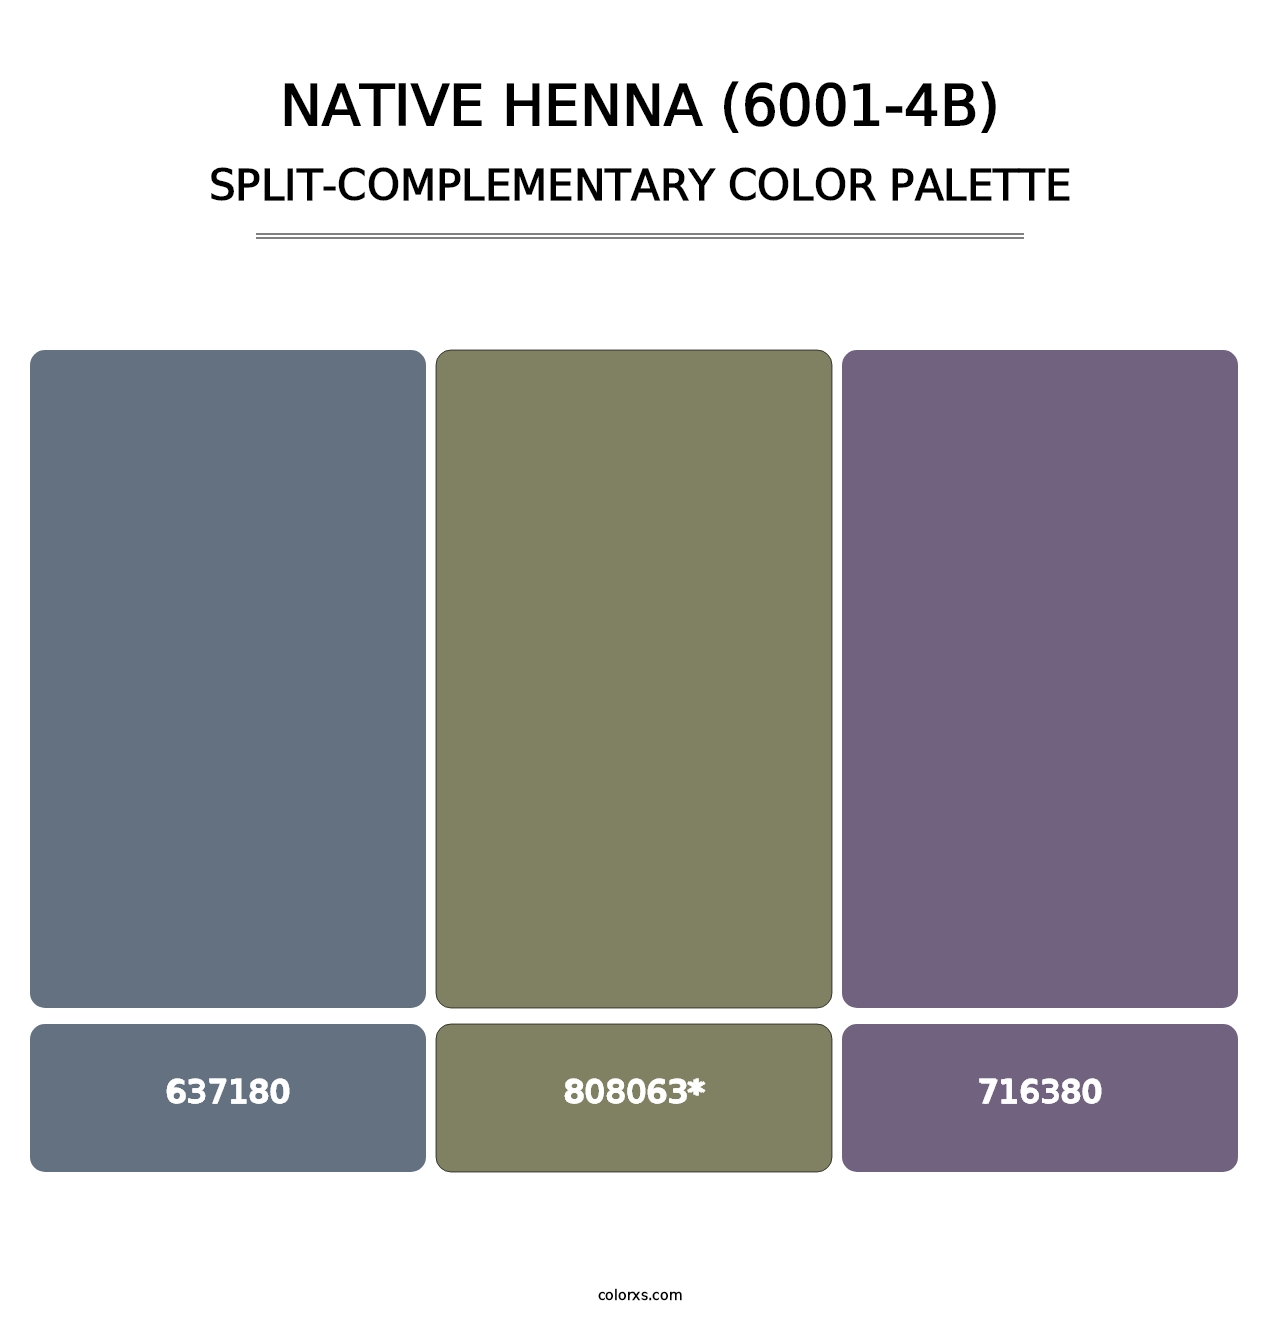 Native Henna (6001-4B) - Split-Complementary Color Palette